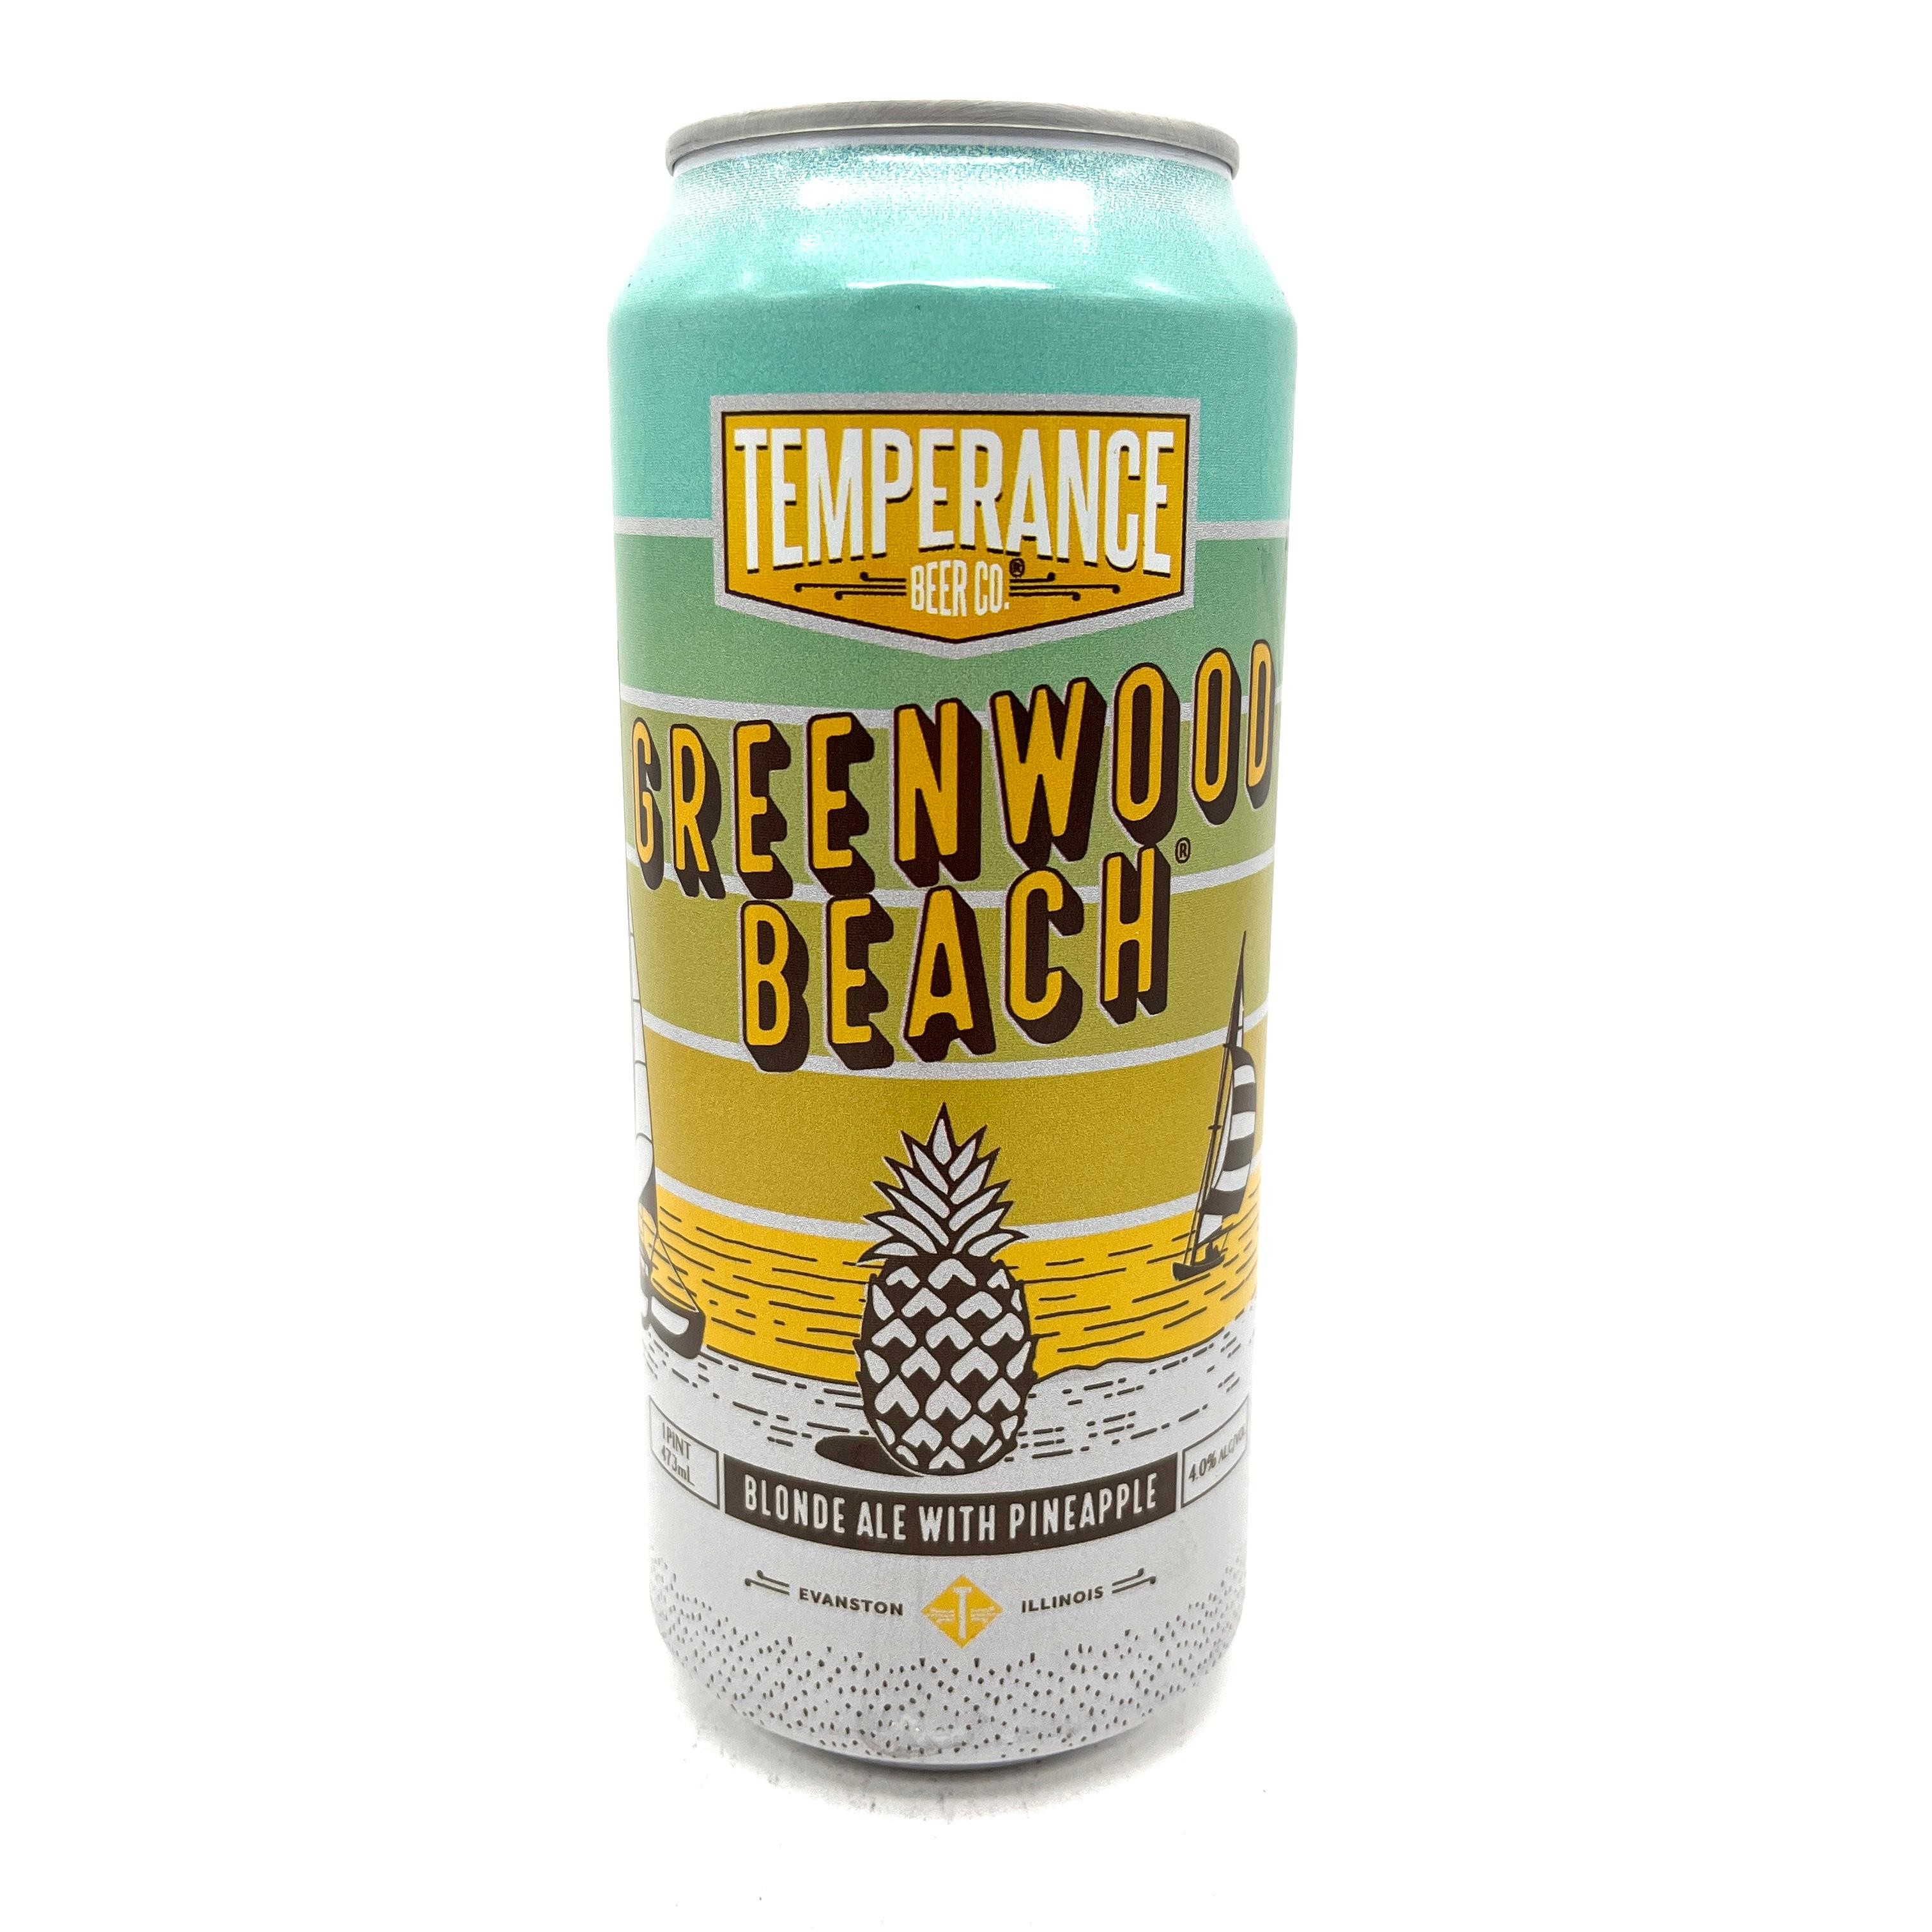 Temperance - Greenwood Beach (16oz)